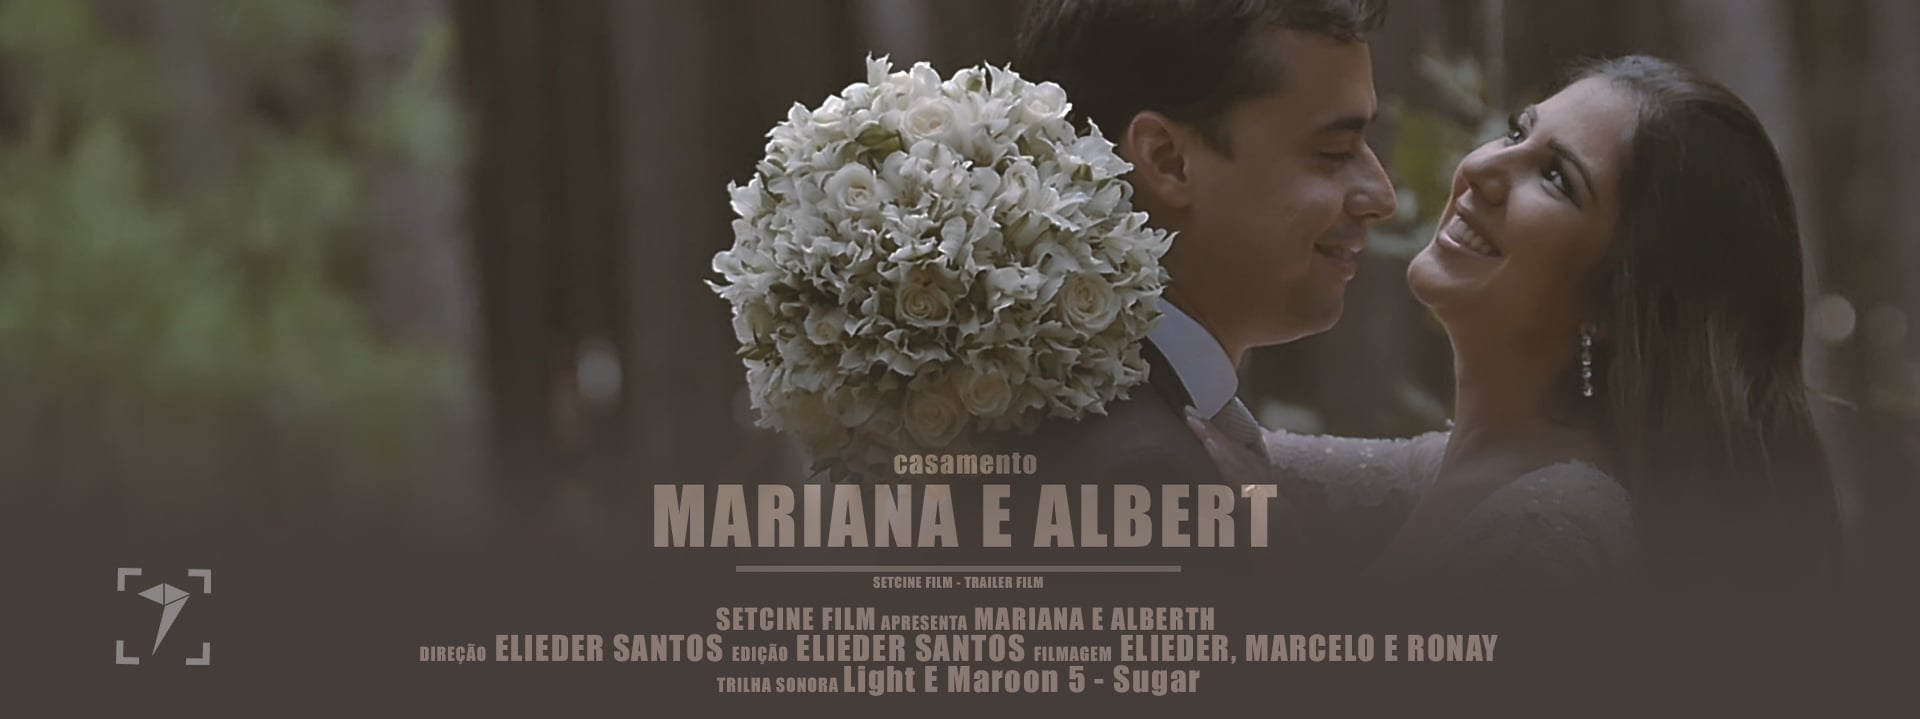 Mariana e Alberth - Trailer Wedding